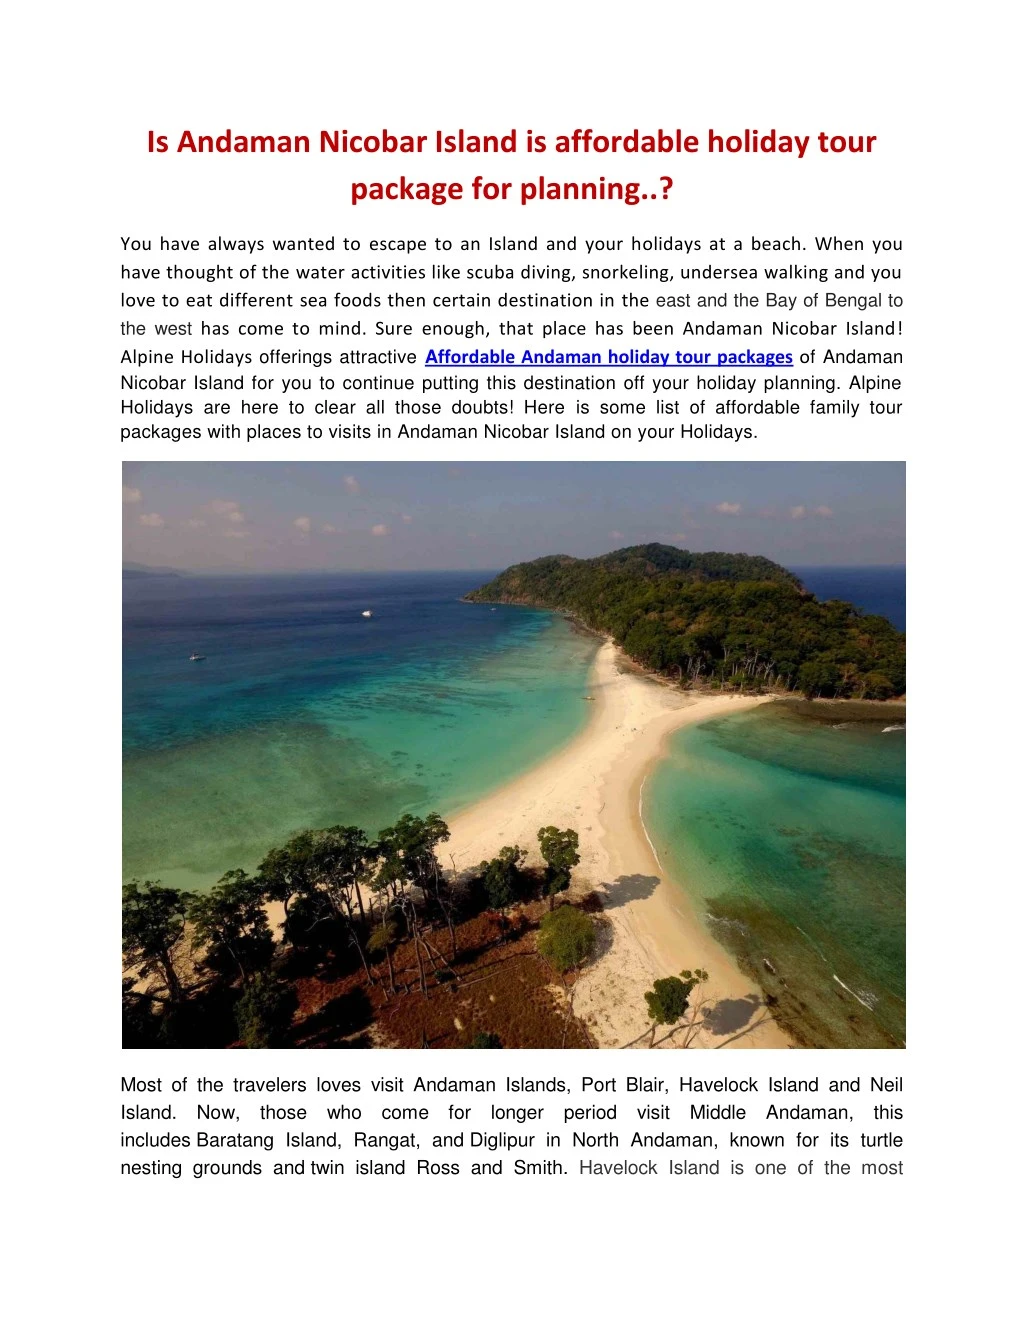 is andaman nicobar island is affordable holiday n.